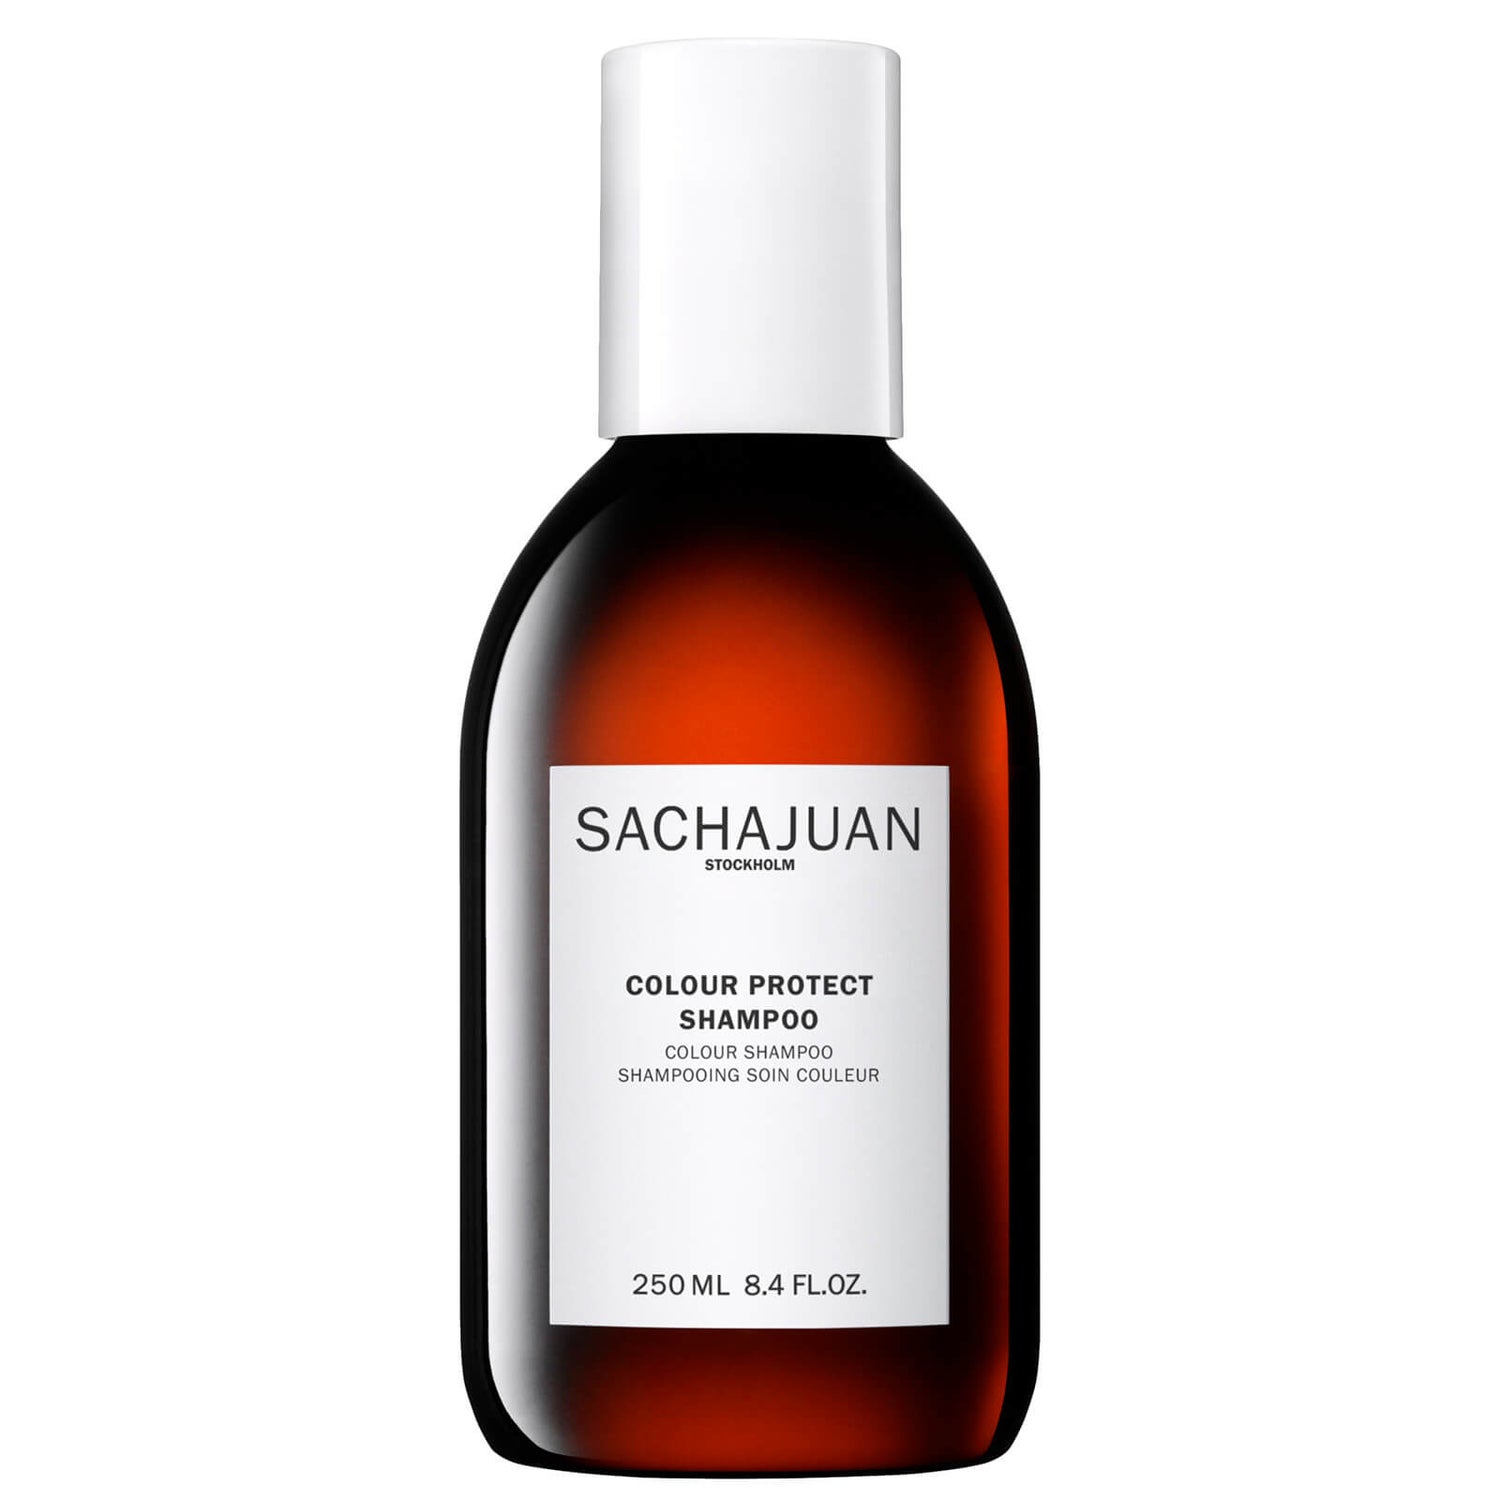 Sachajuan Colour Protect Shampoo 250 ml